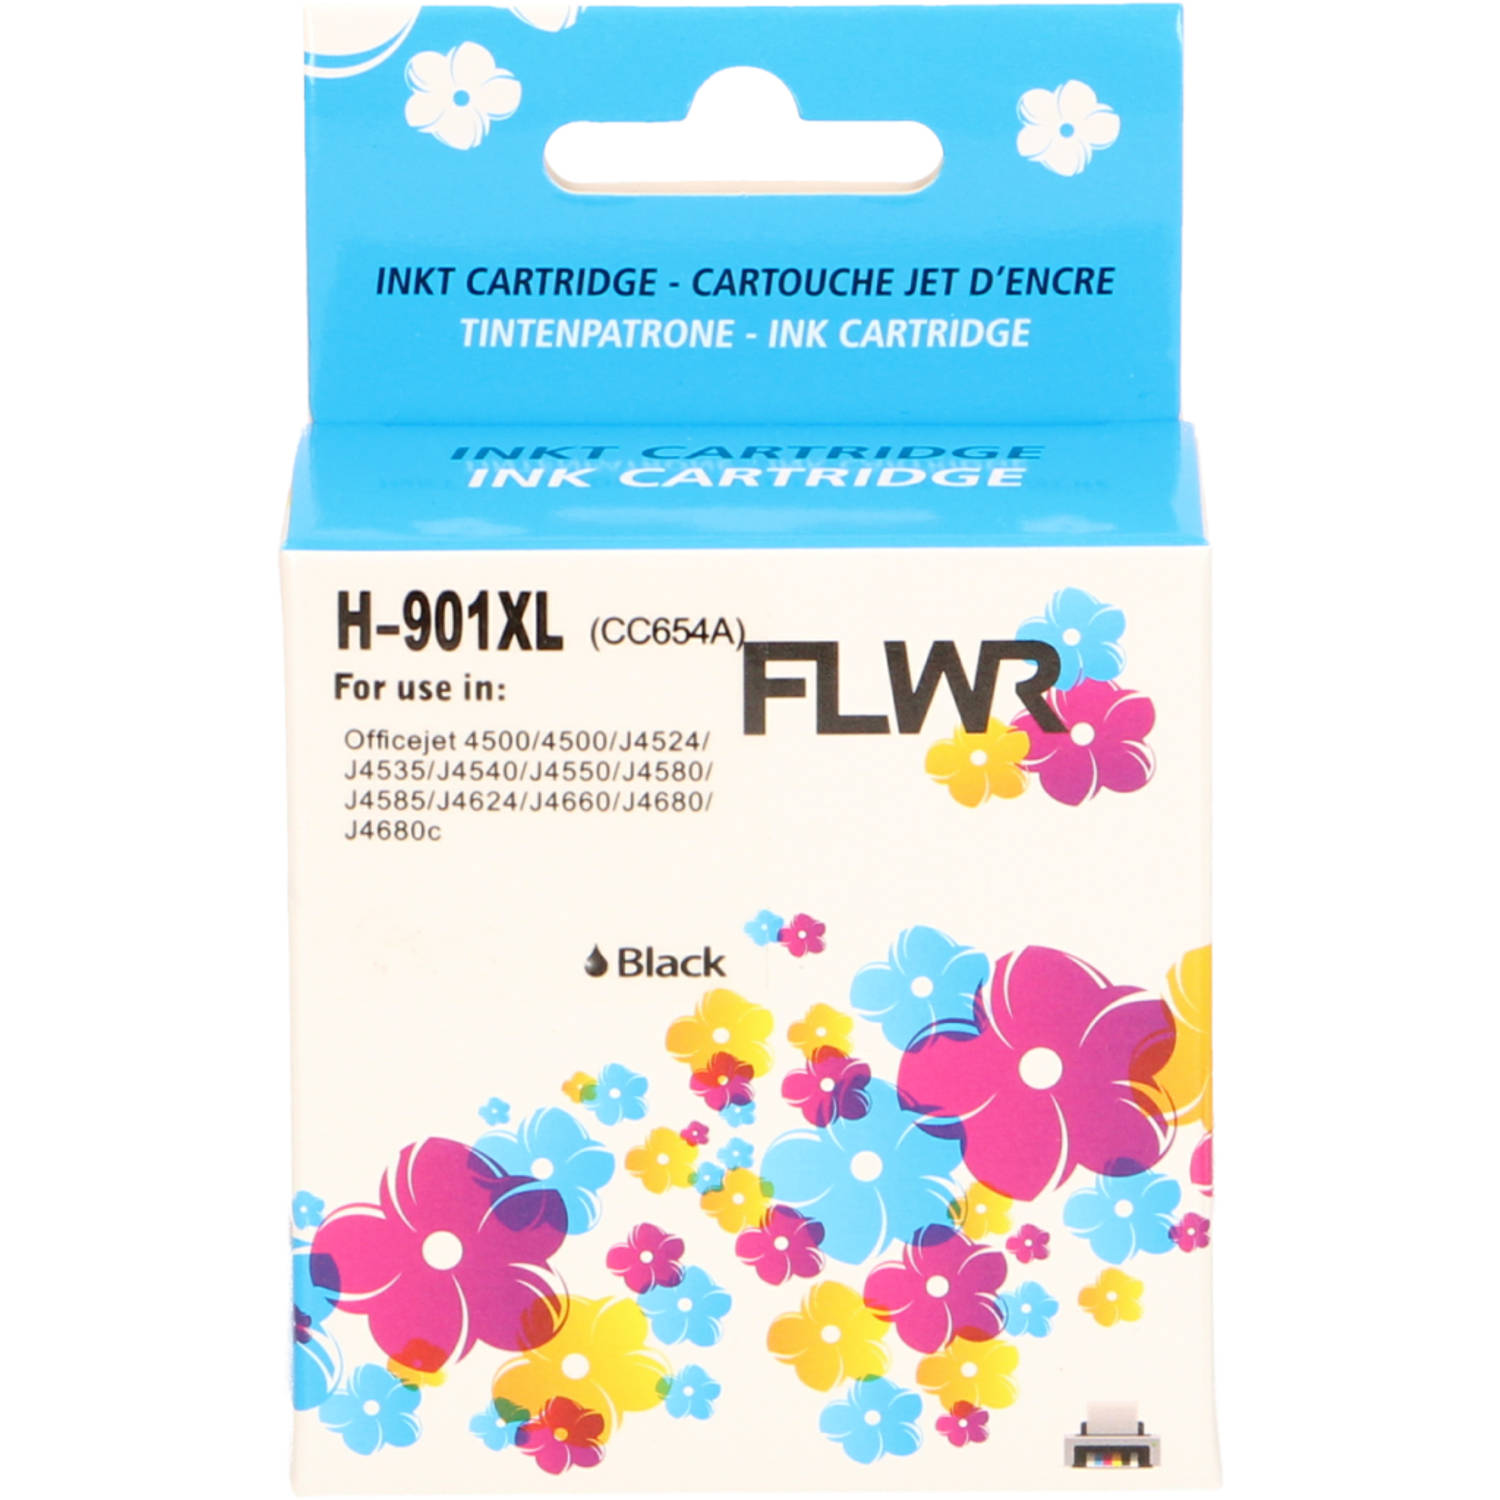 FLWR HP 901XL zwart cartridge